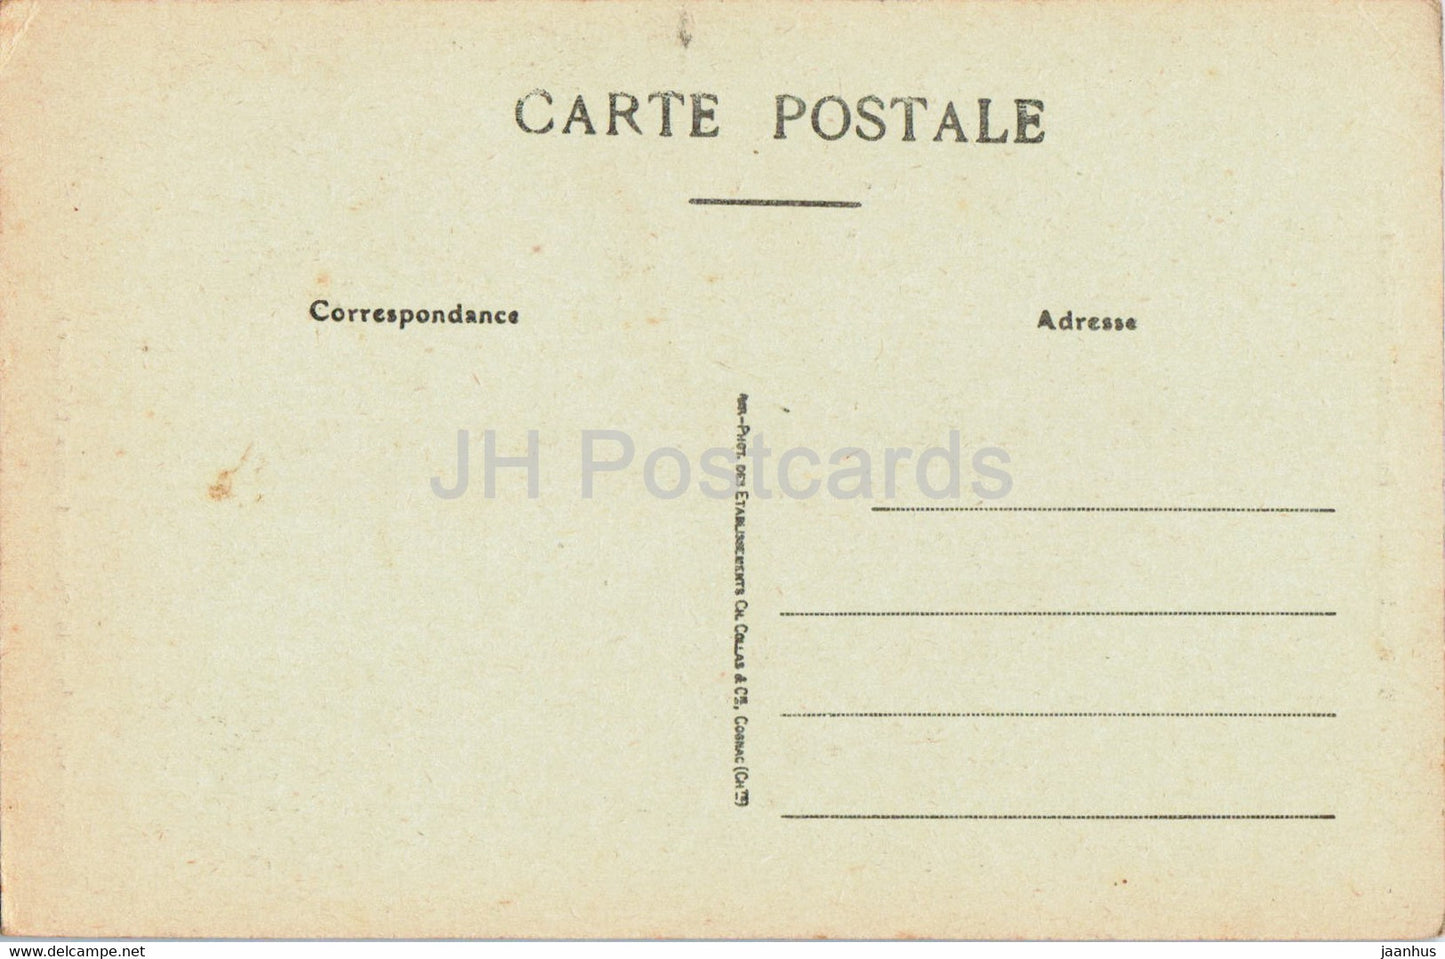 Brouage - Porte Nord - 26 - carte postale ancienne - France - inutilisée